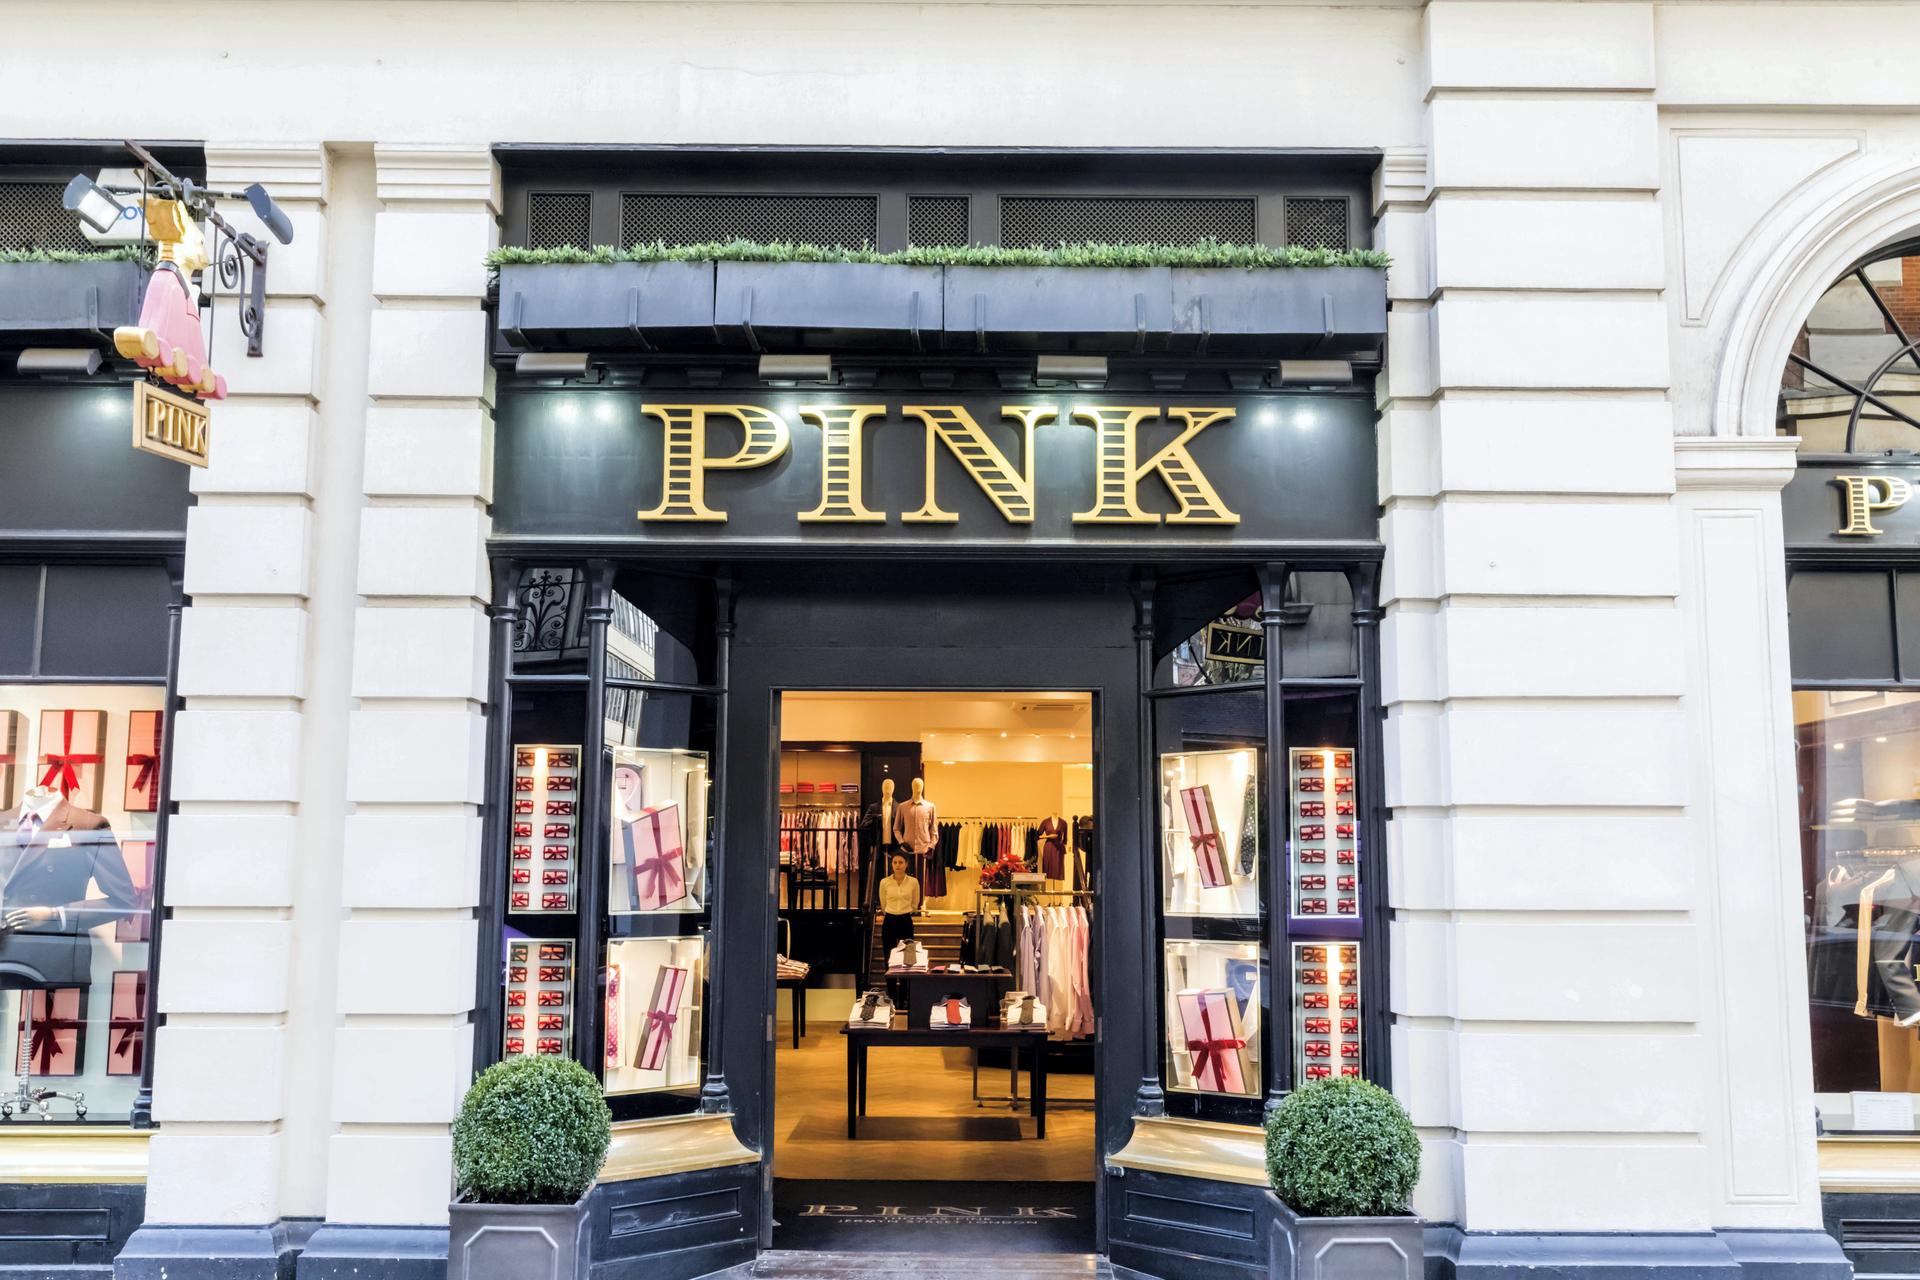 Thomas PINK Jermyn Street London Men Pink Casual Dress Shirt Size